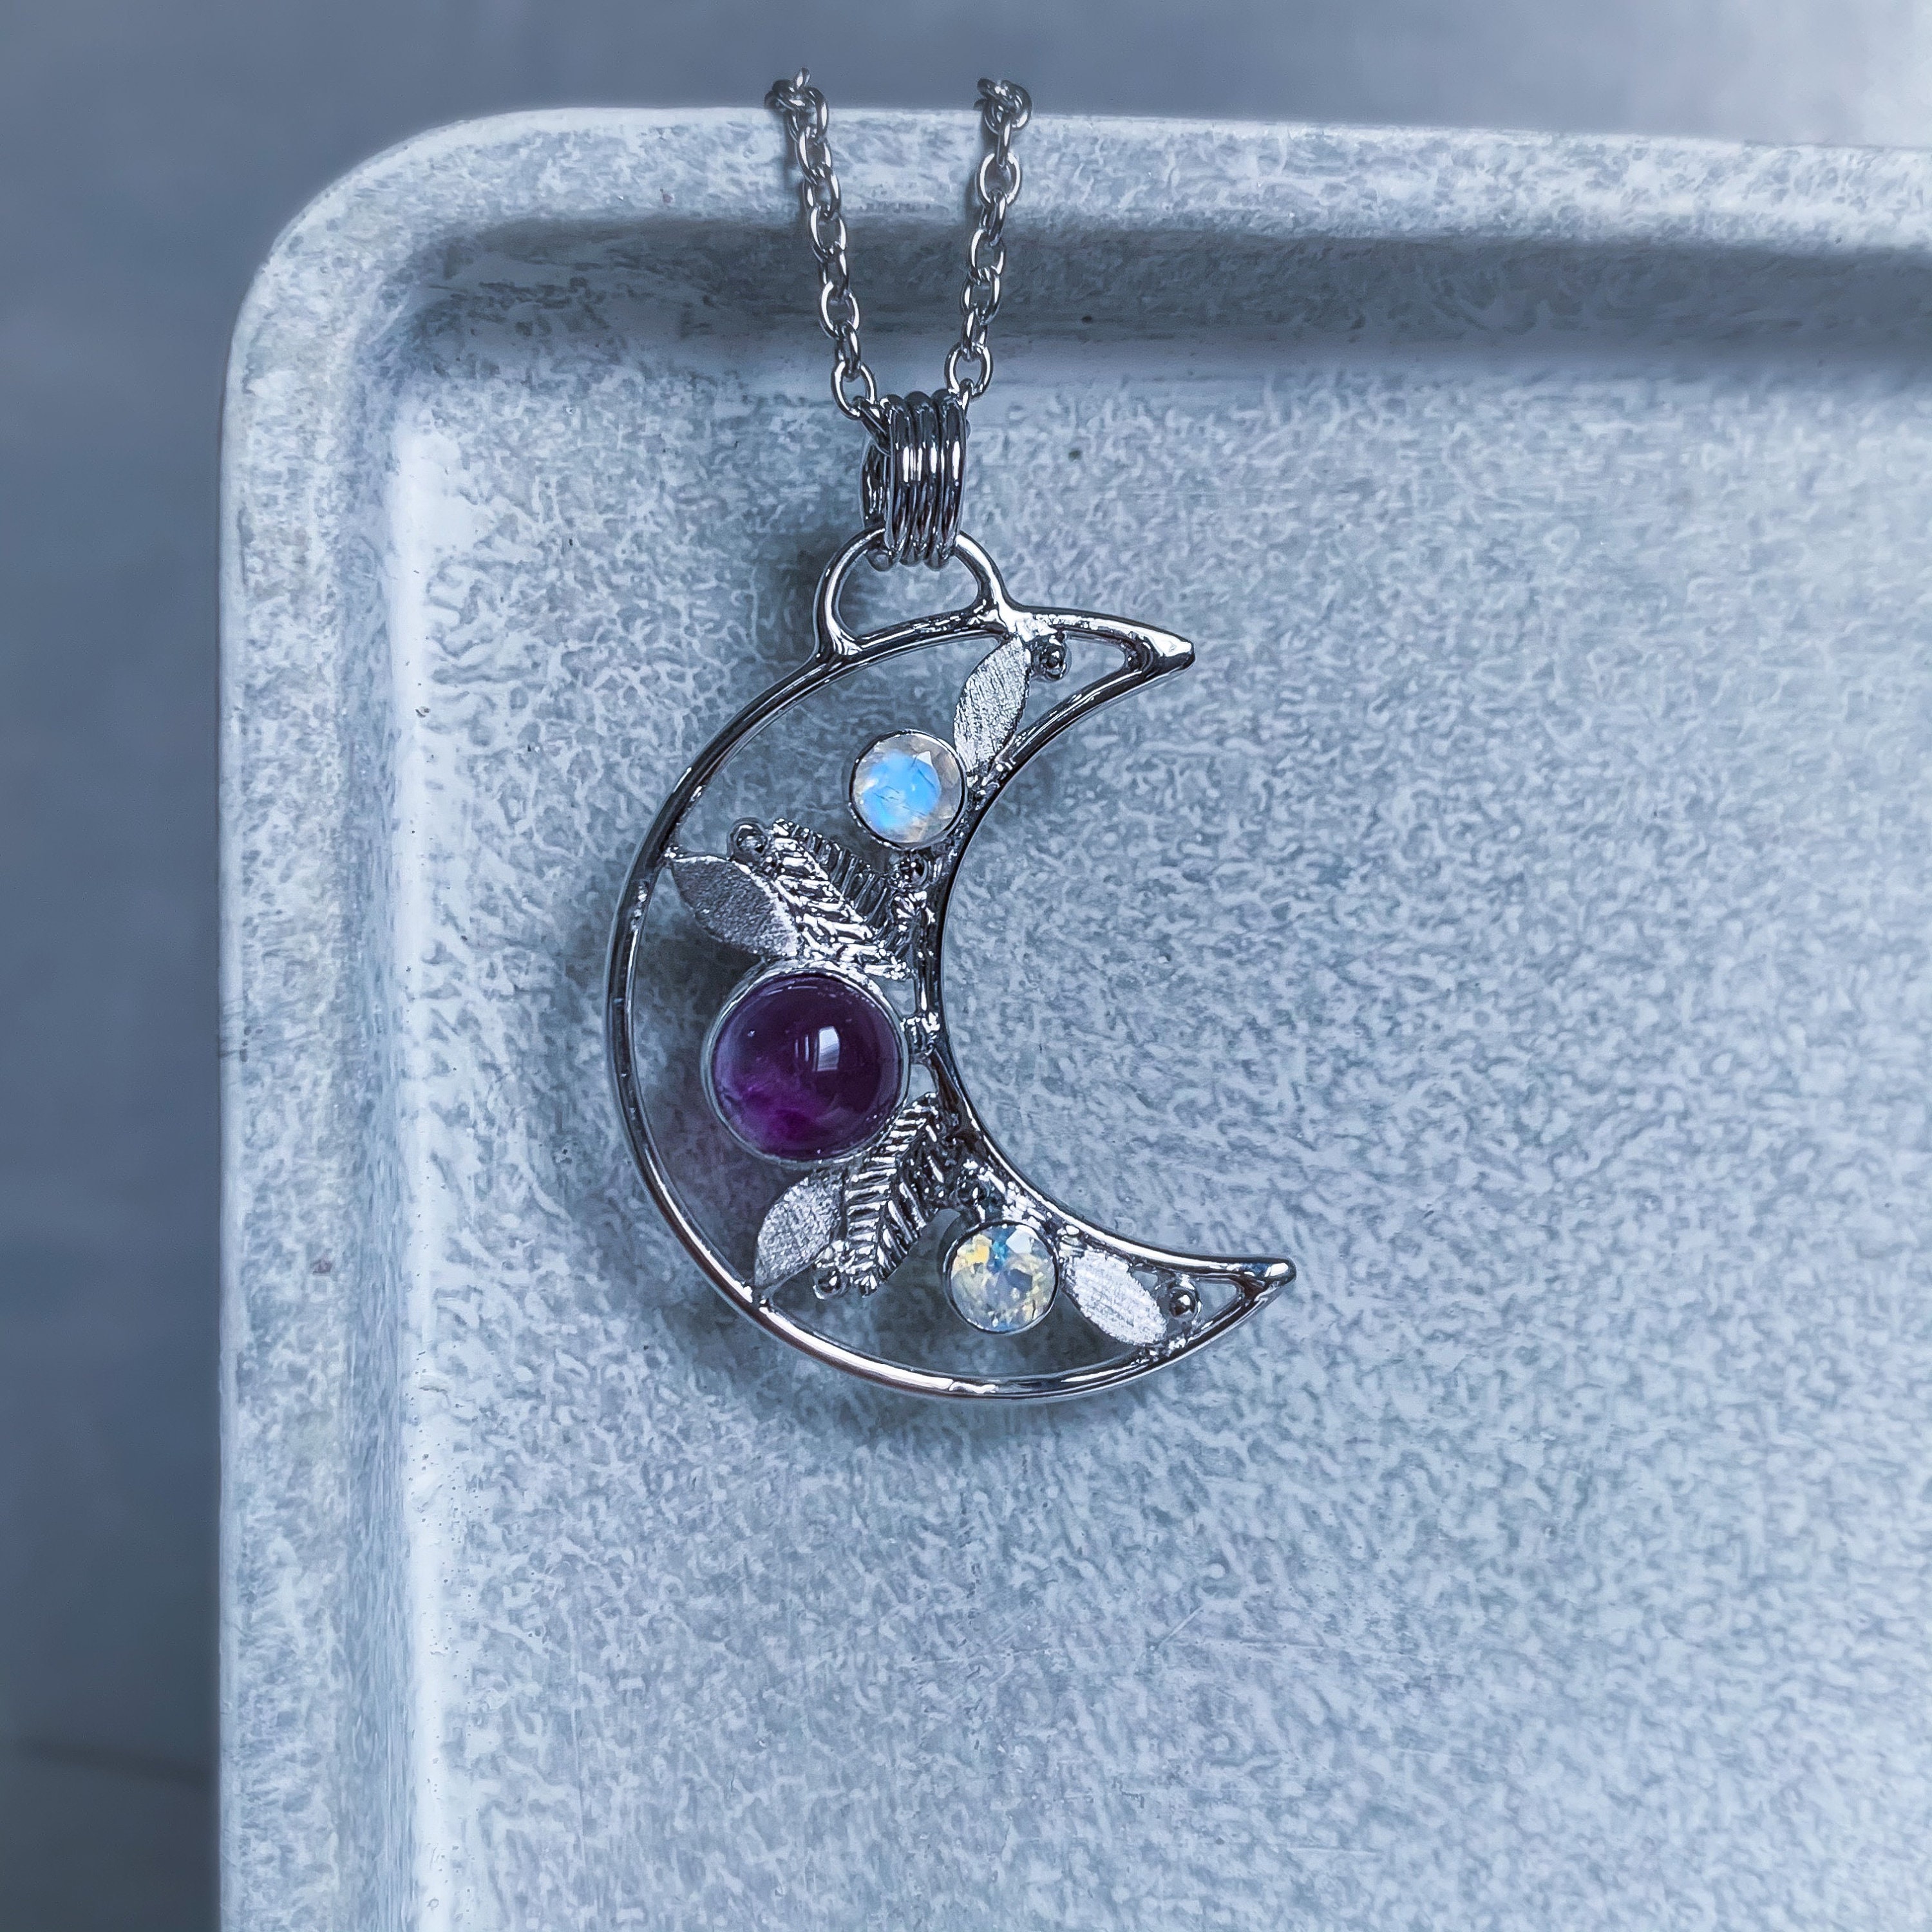 Moon necklace moon jewelry moonstone jewelry amethyst | Etsy